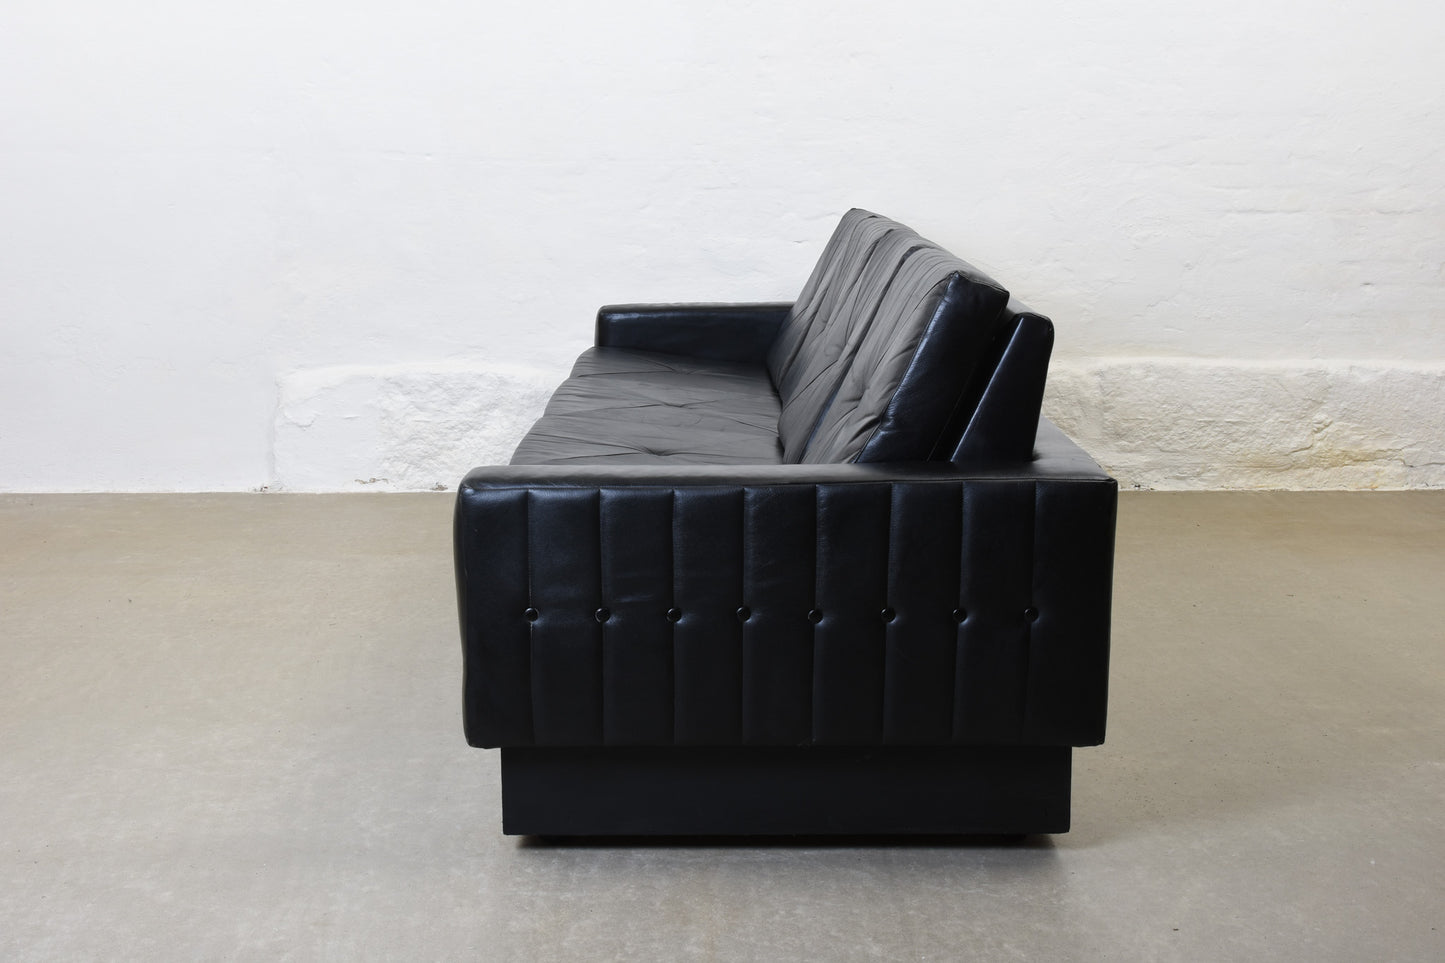 1960s Swedish leather sofa bed